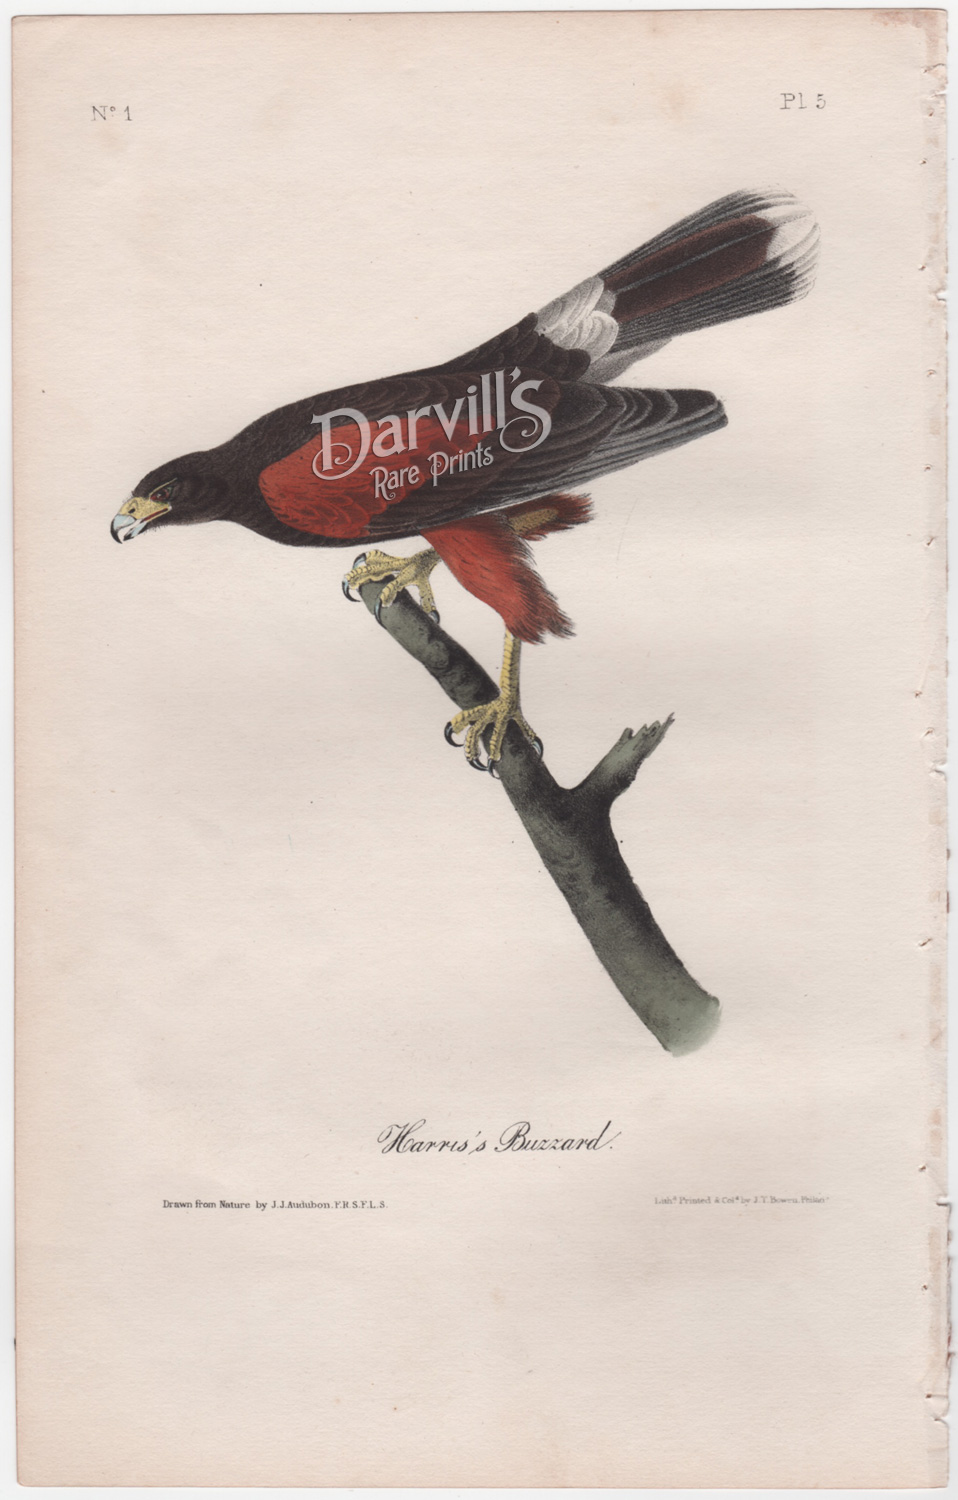 Harris's Buzzard (Hawk) first edition octavo